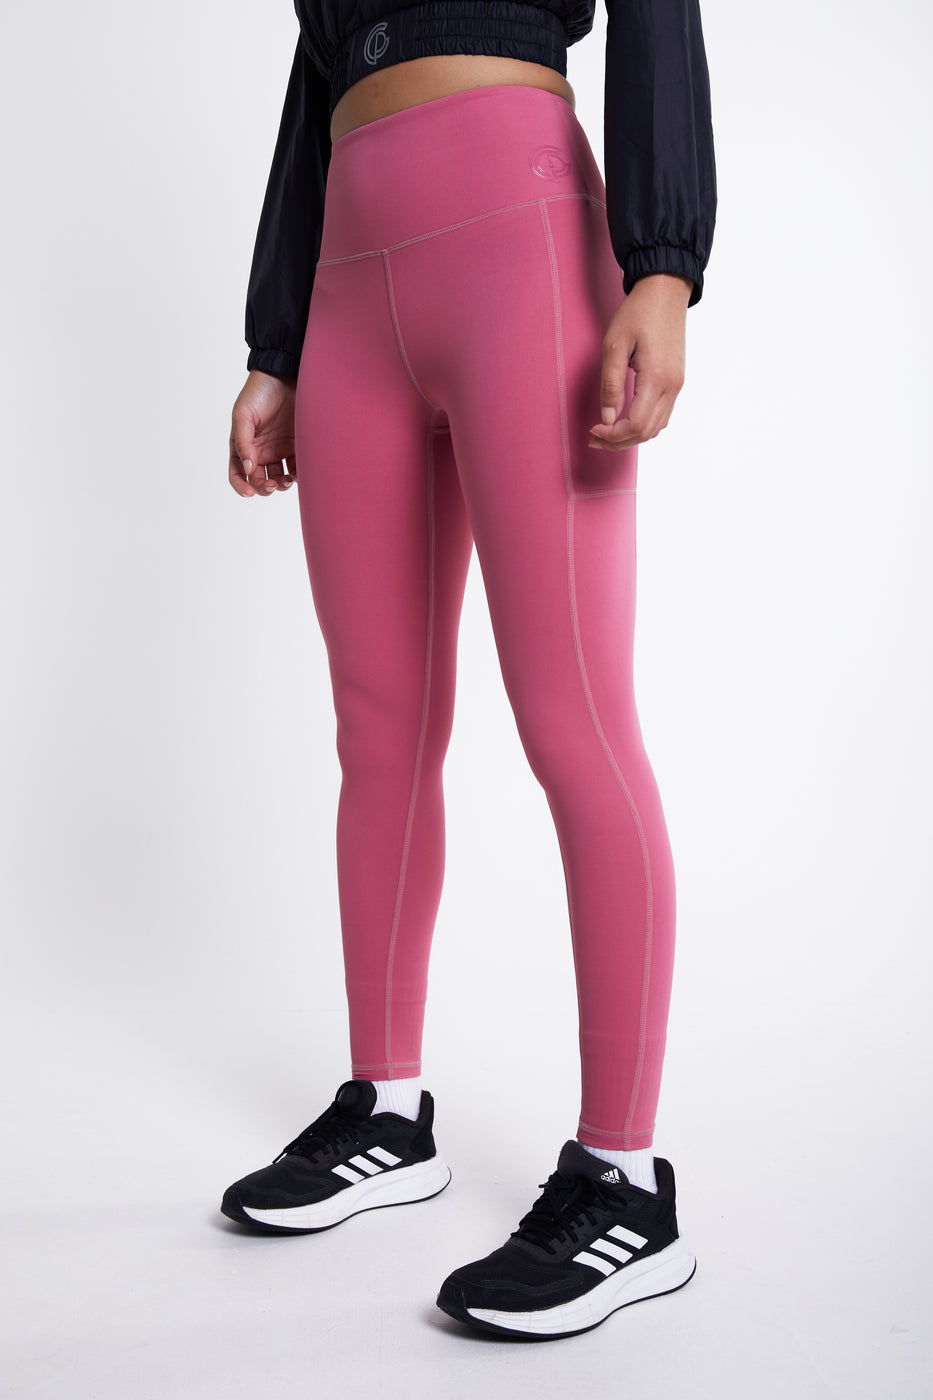 Power Training Legging- Hot Pink – GymPro Apparel